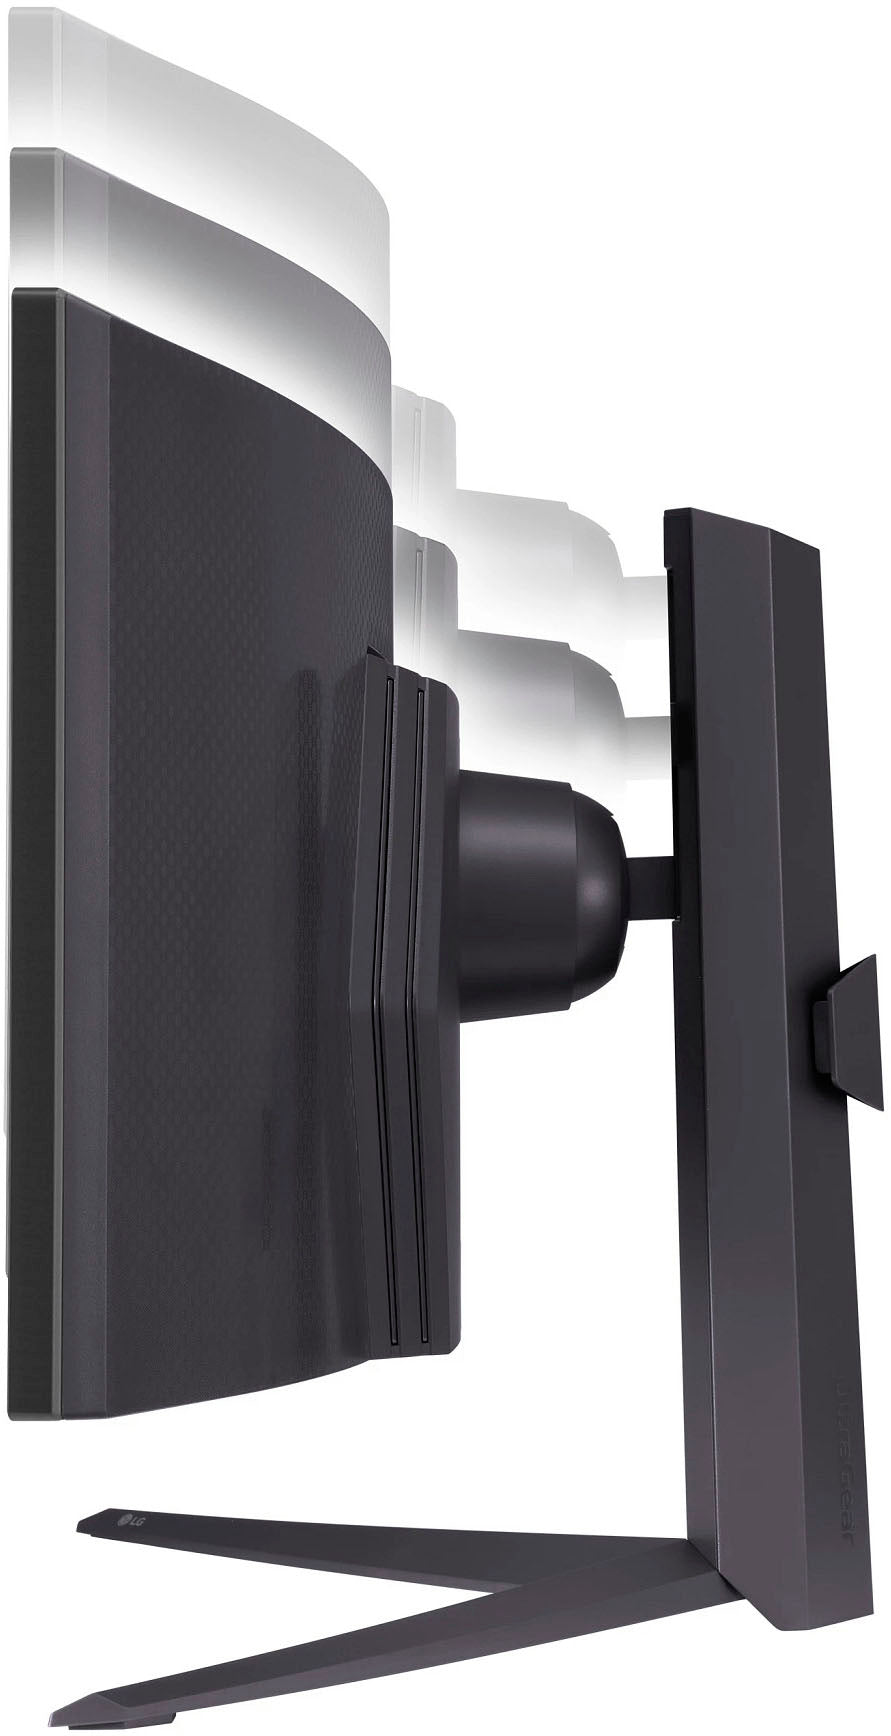 LG - UltraGear 45” Curved QHD 200Hz 1-ms FreeSync Premium Gaming Monitor with HDR (Display Port, HDMI, USB Type-C) - Black_4